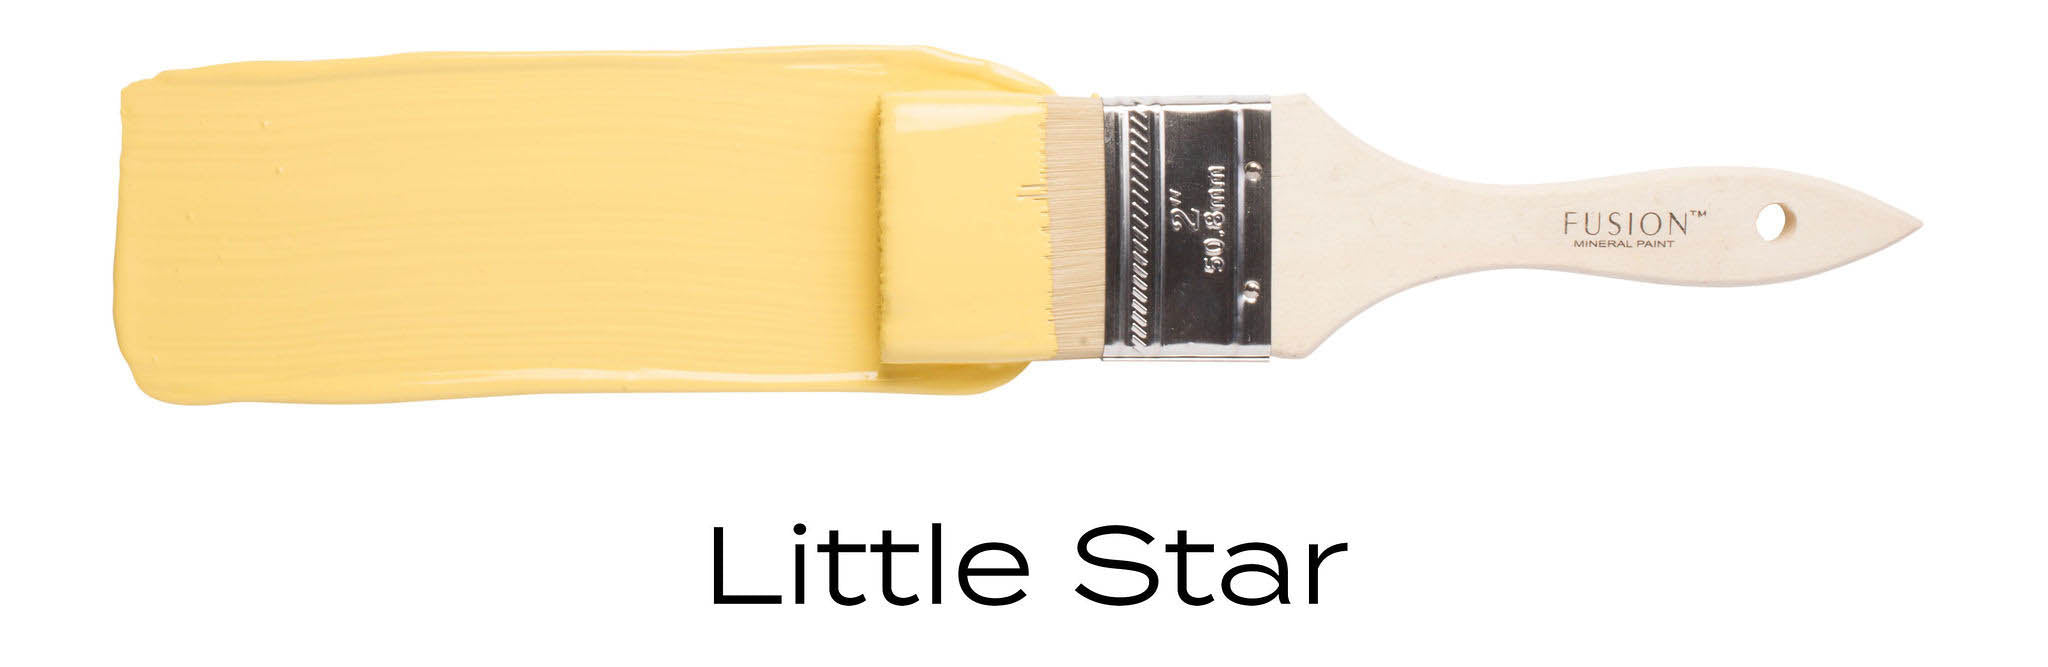 Little Star tones for tots fusion mineral paint, child friendly furniture paint uk